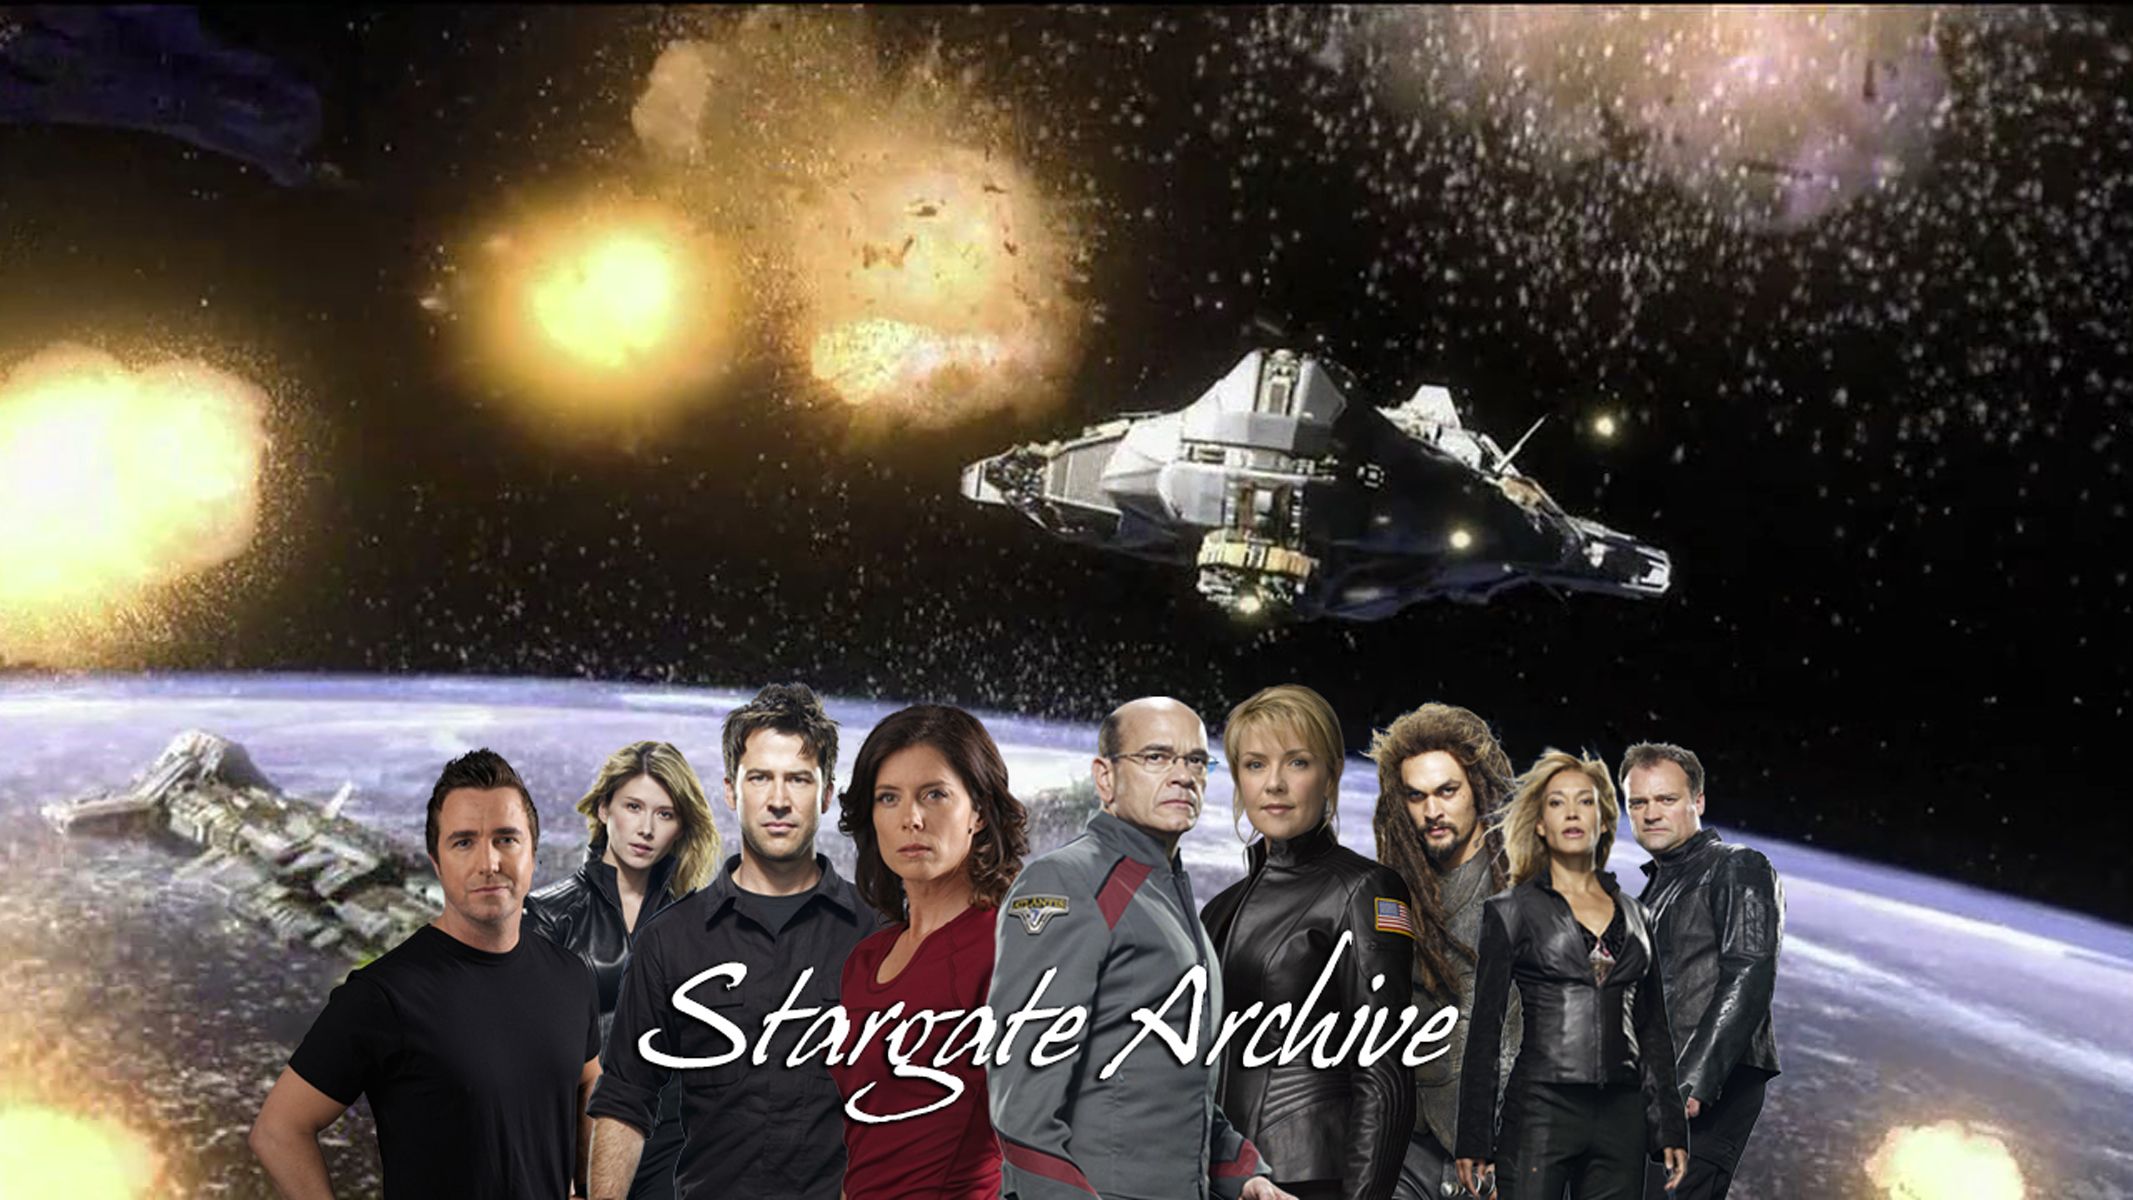 Stargate Archive - Media Central: Stargate Atlantis, Stargate SG1 ...